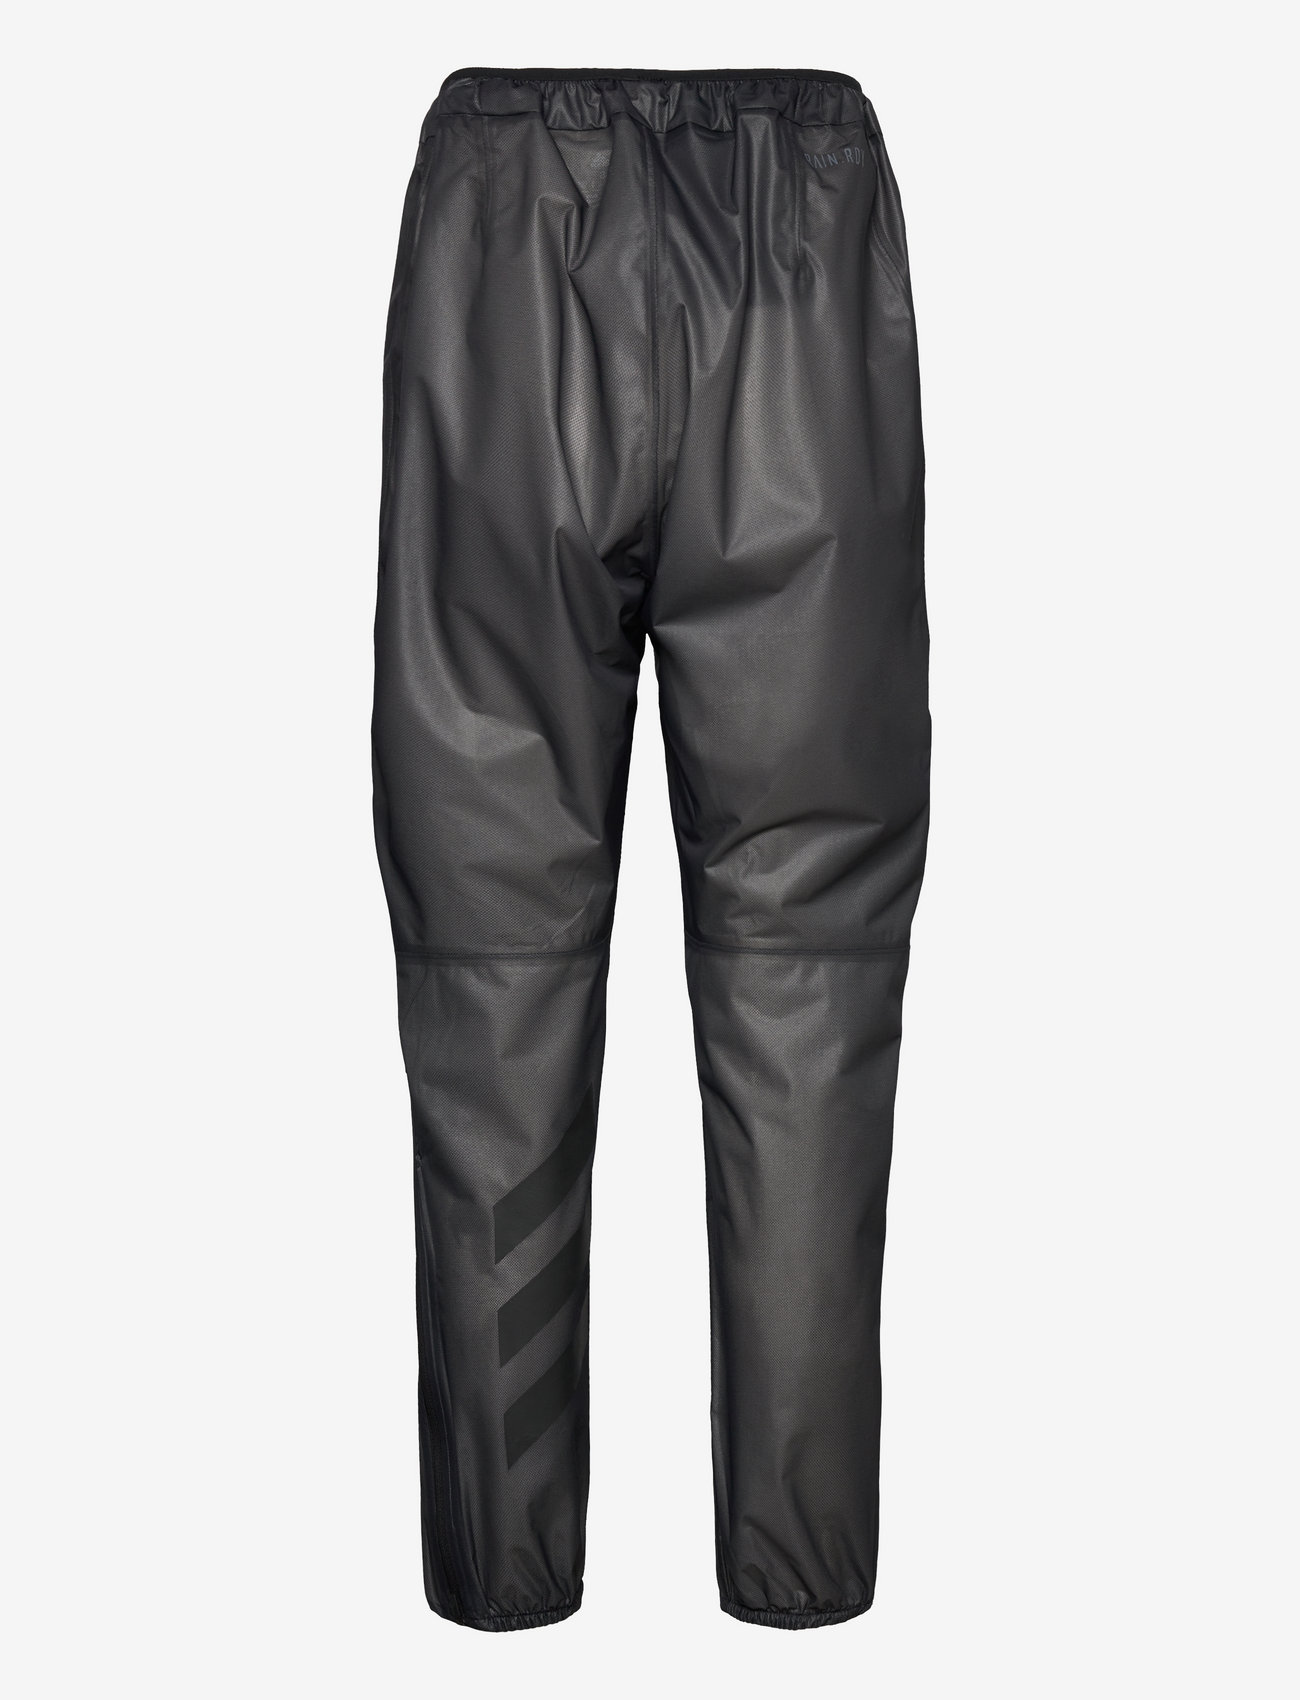 adidas Terrex - W XPR LT RAIN P - waterproof trousers - black - 1